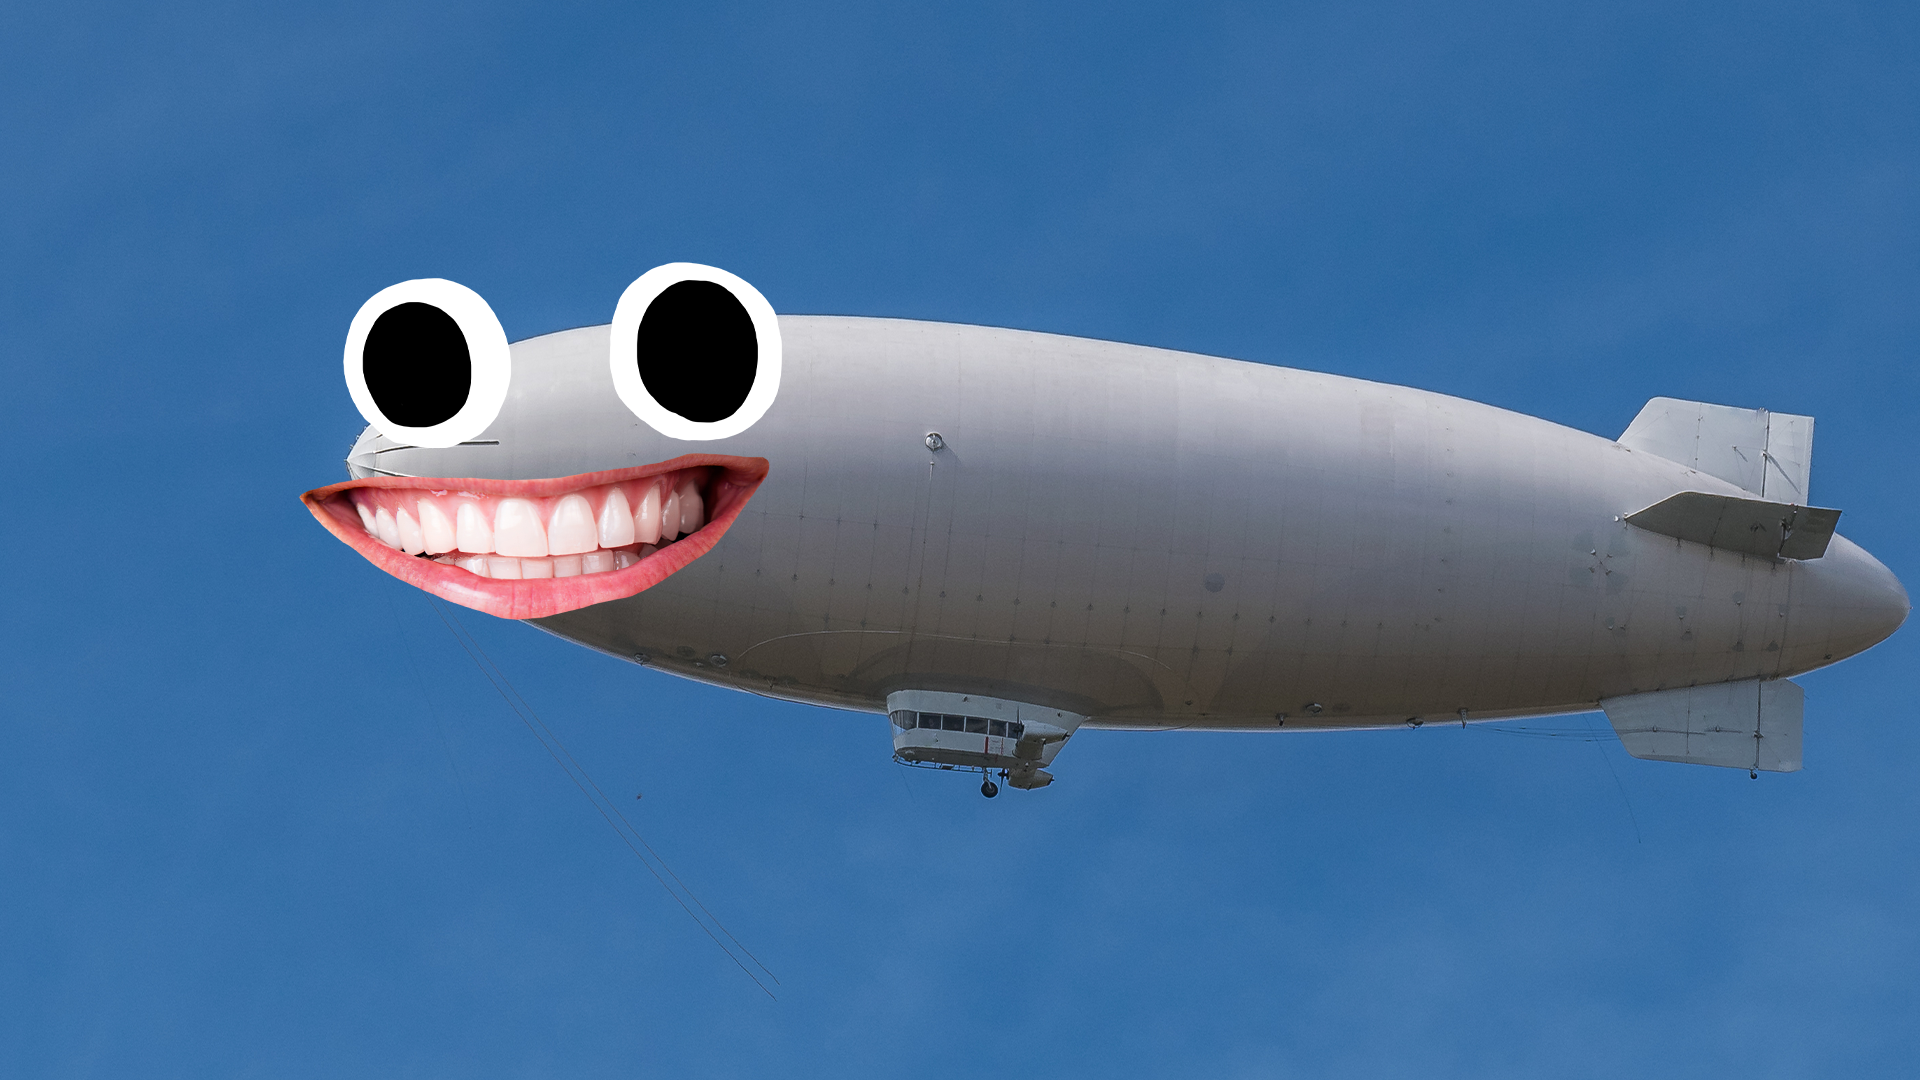 A zeppelin with a goofy face